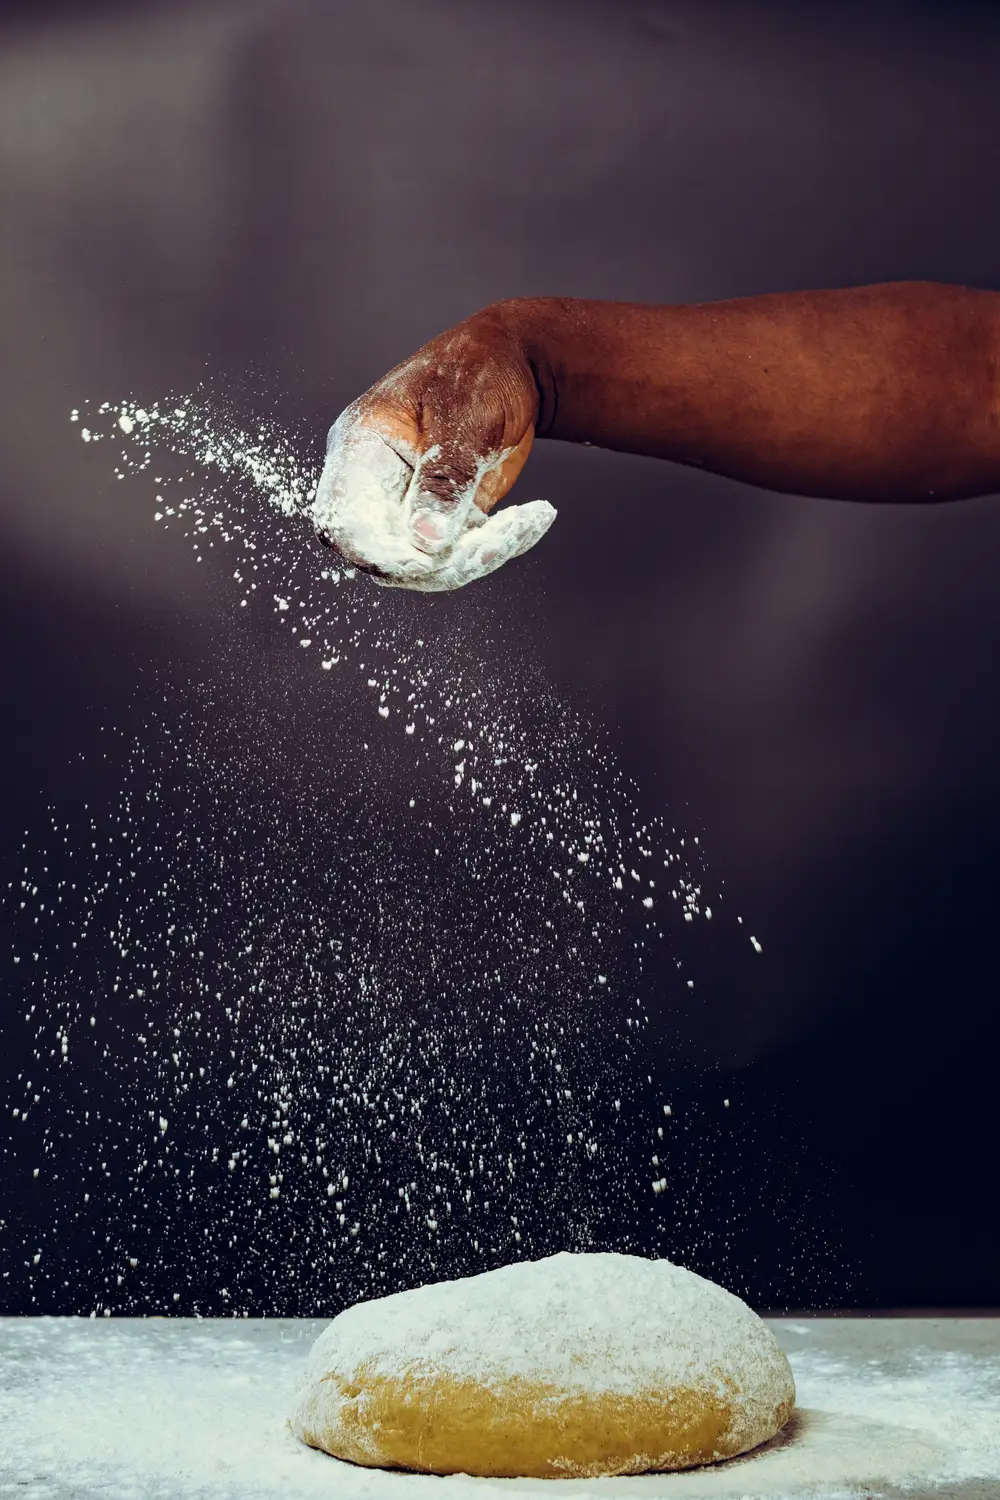 Person sprinkling flour for kneading dough